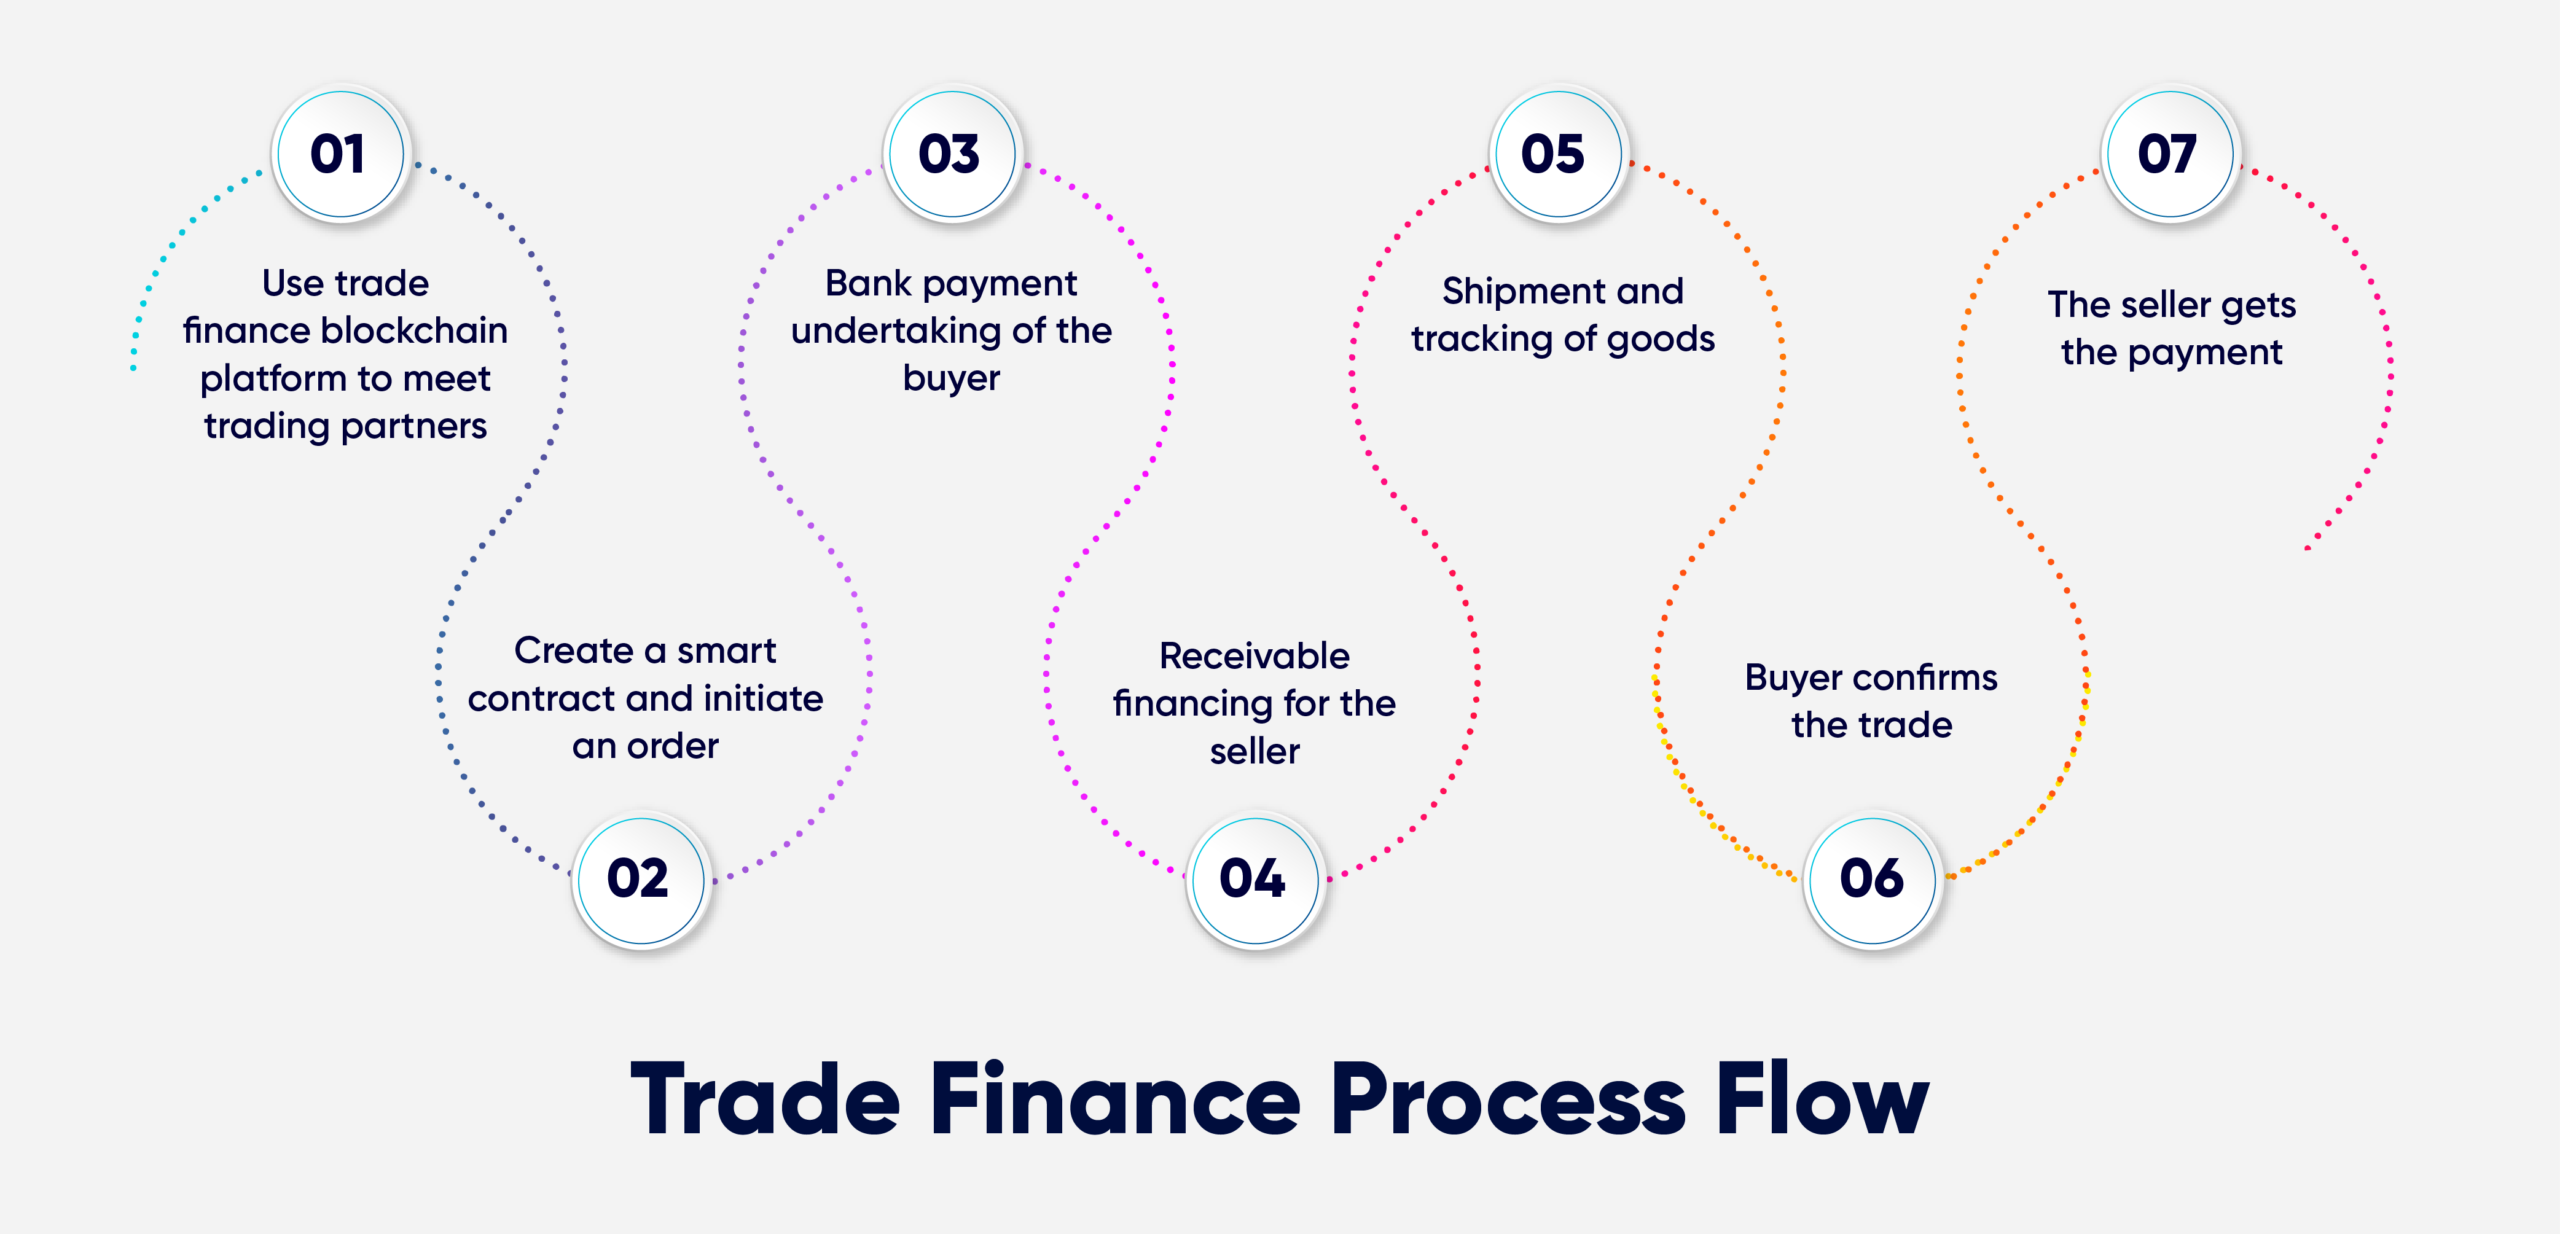 blockchain in trade finance